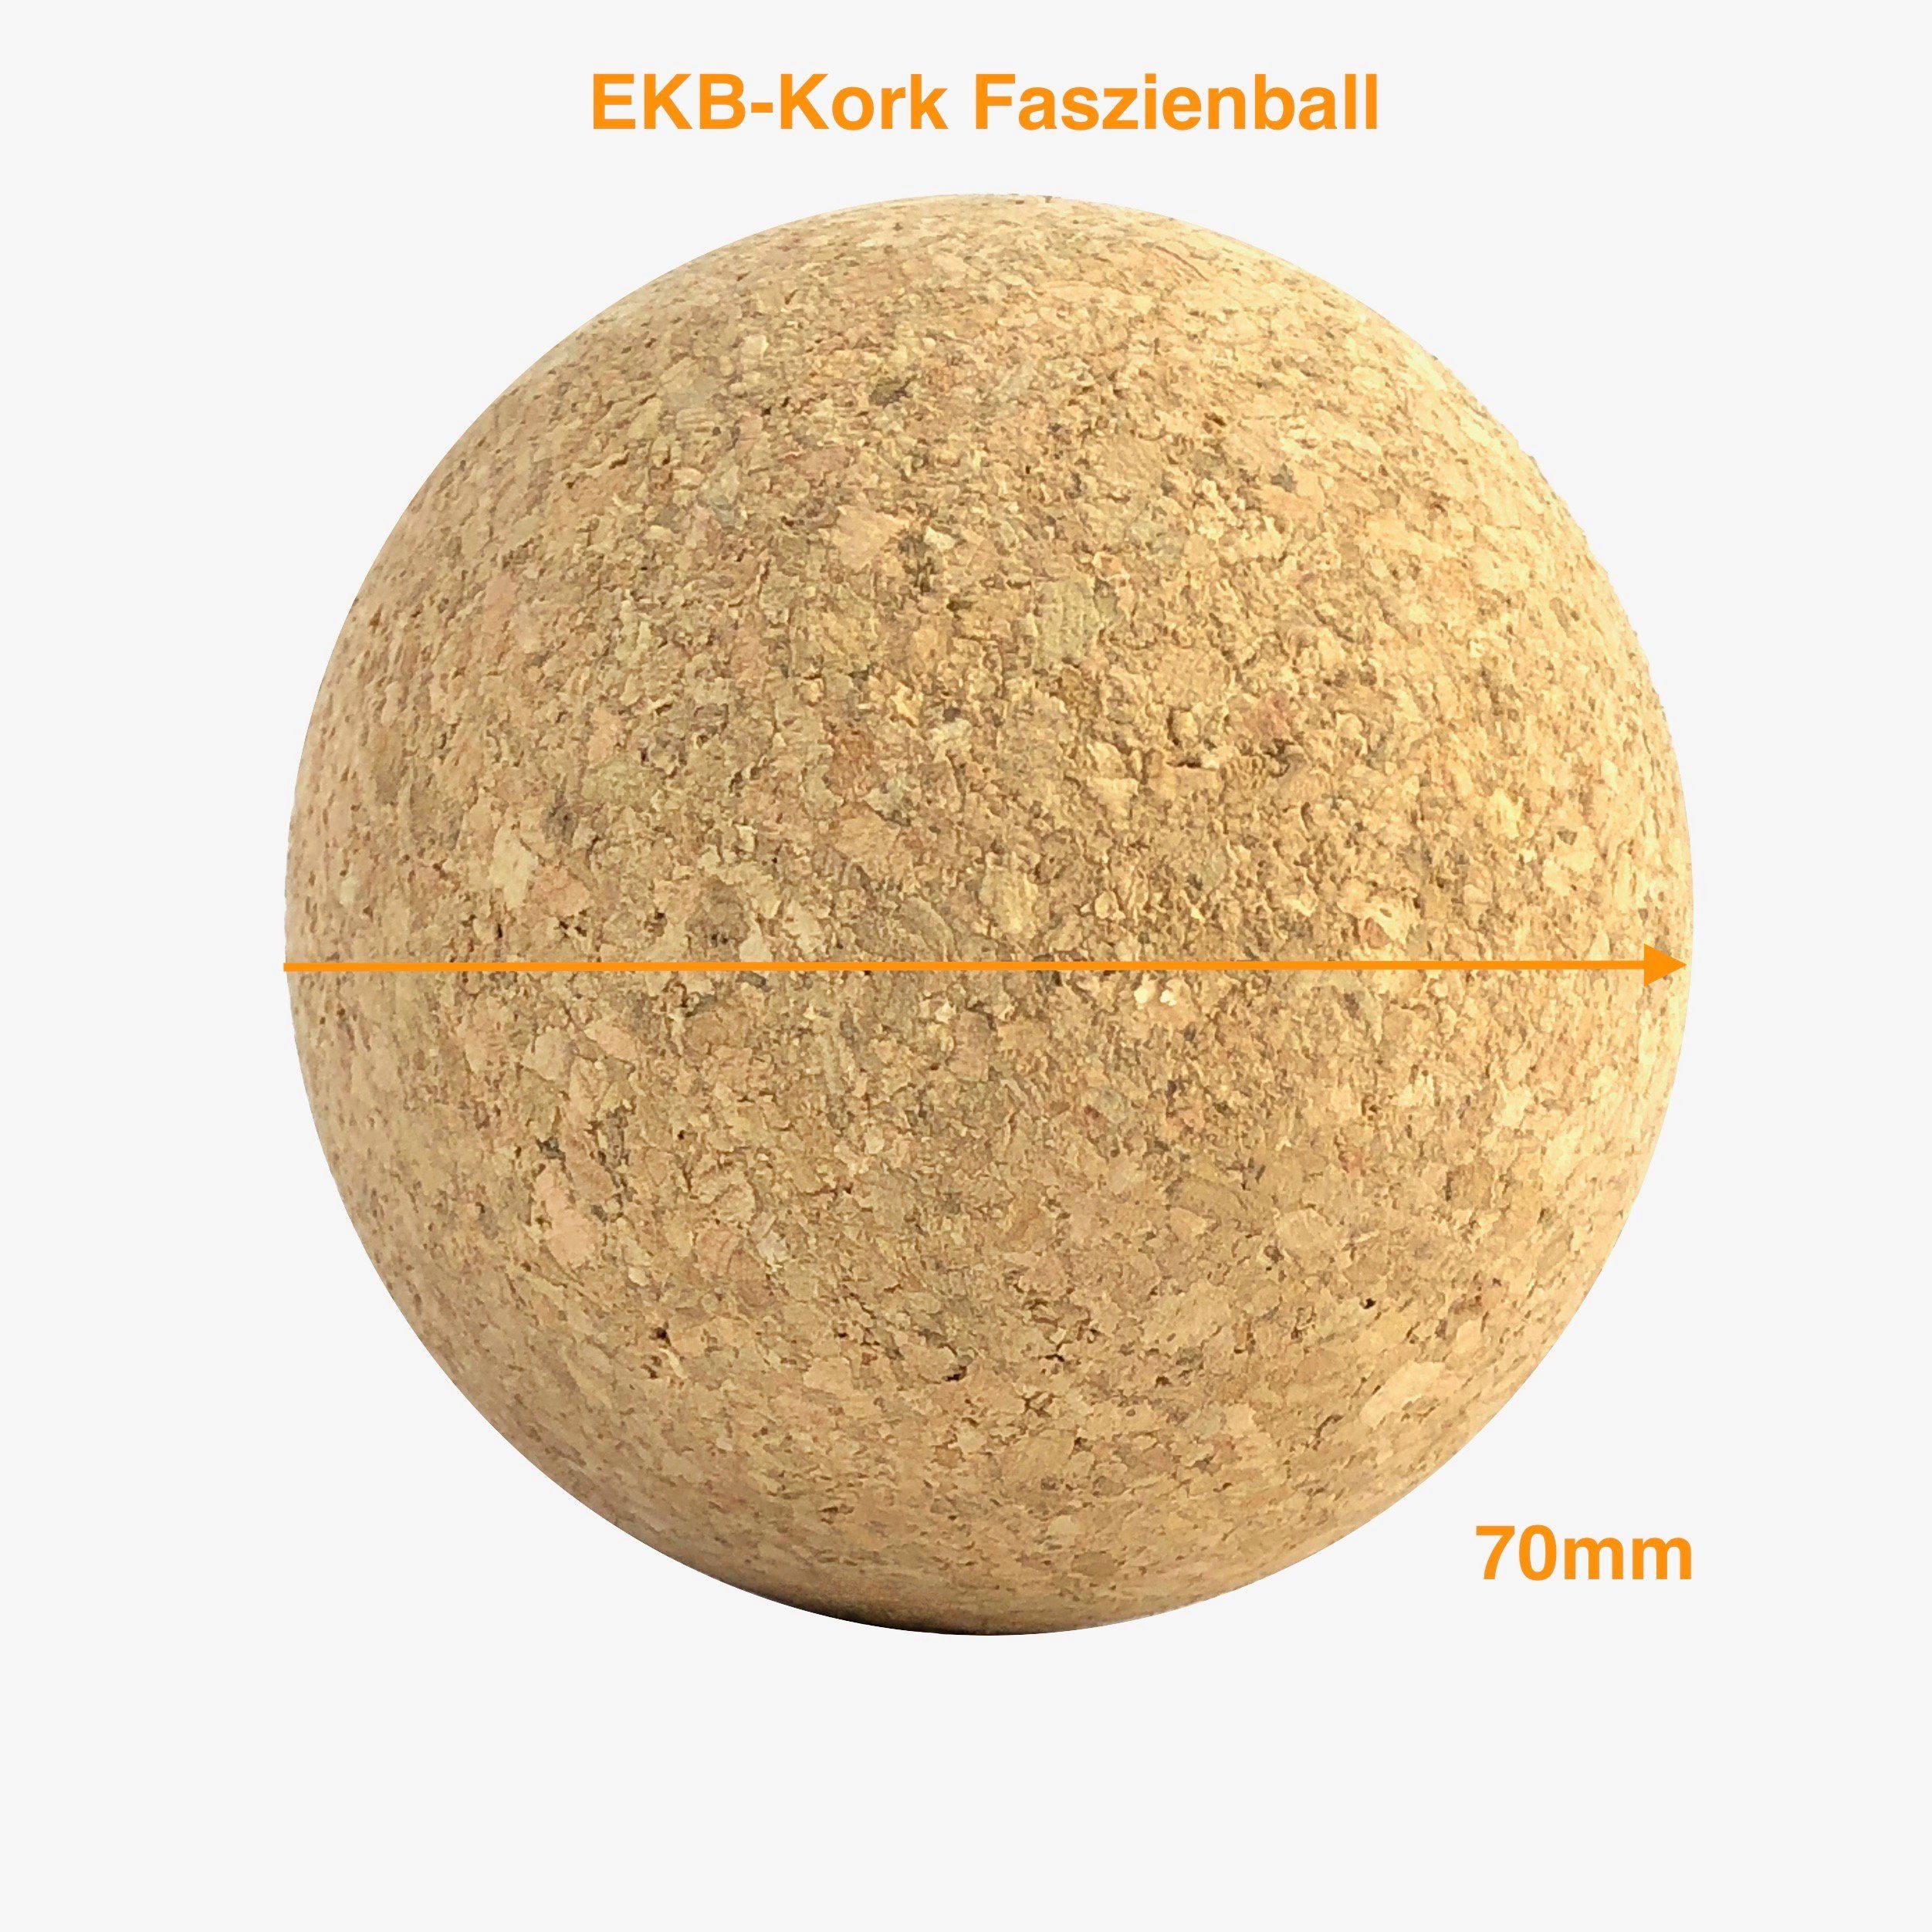 Massage 70mm Kork EKB-Kork nachwachsendem aus Spielzeug Kugel Basteln, Naturprodukt Faszien Yogablock Faszienball Kork